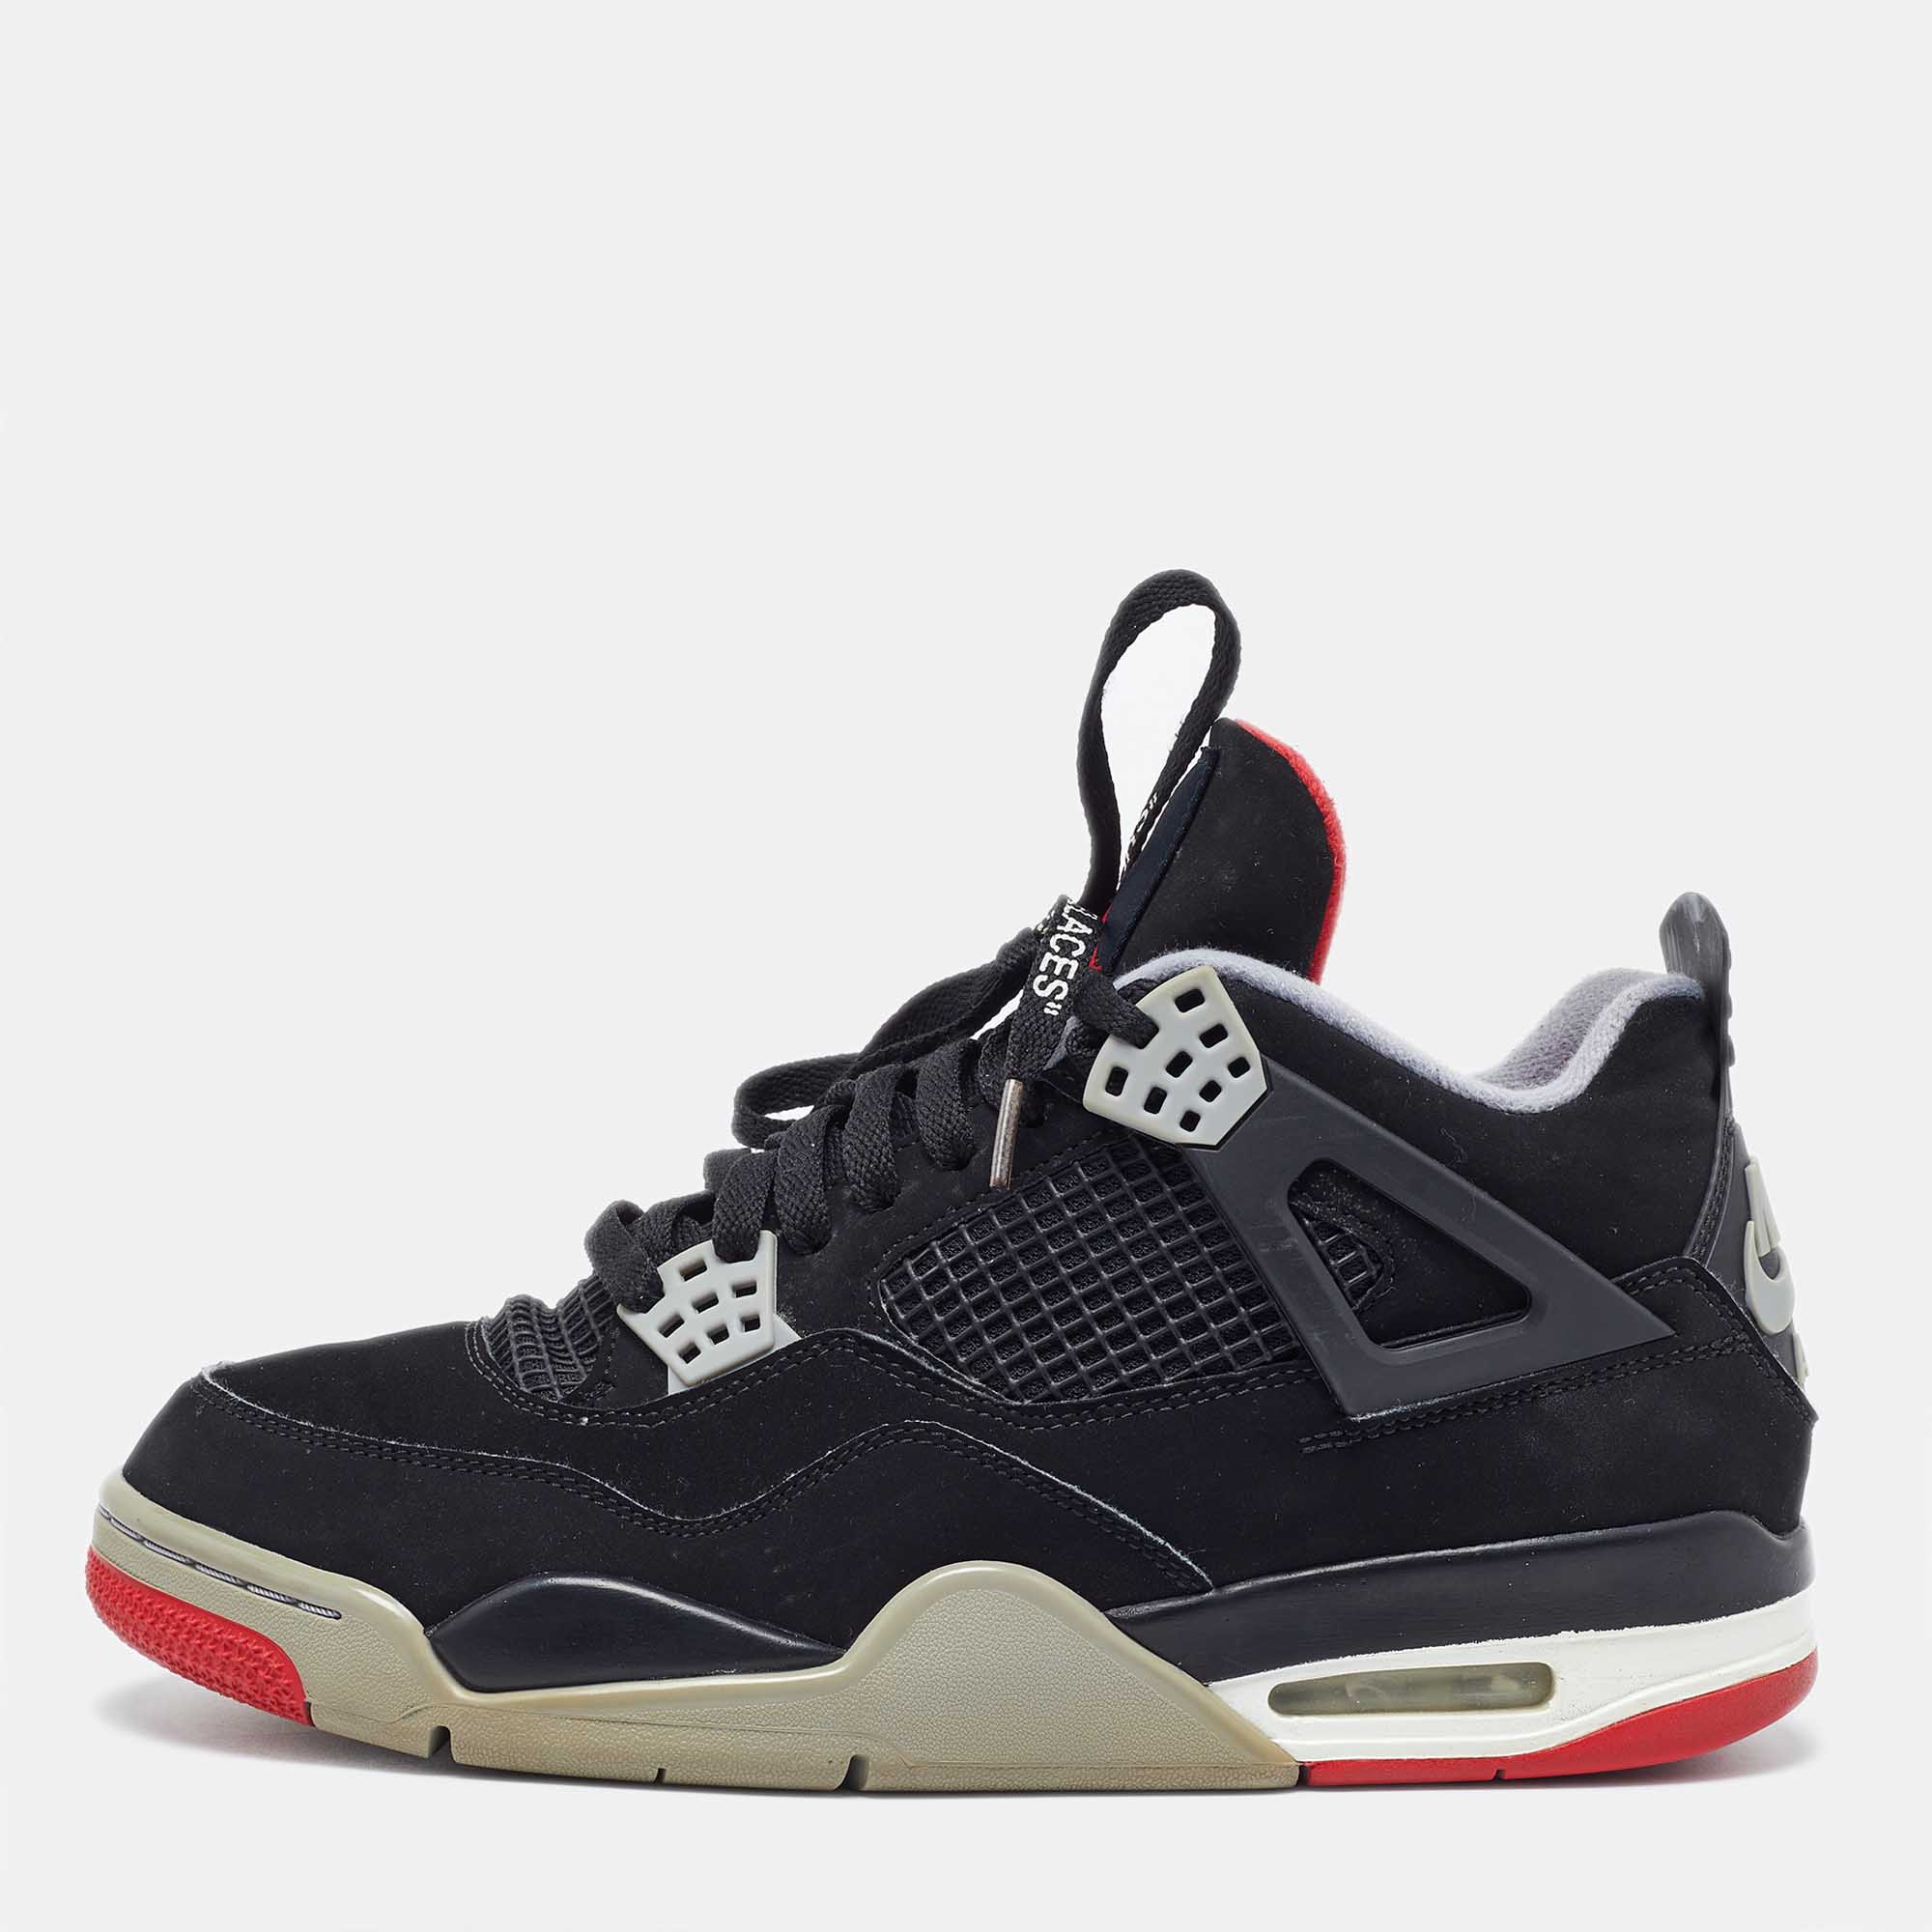 

Nike Air Jordans 4 Retro Bred Black Faux Suede High Top Sneakers Size